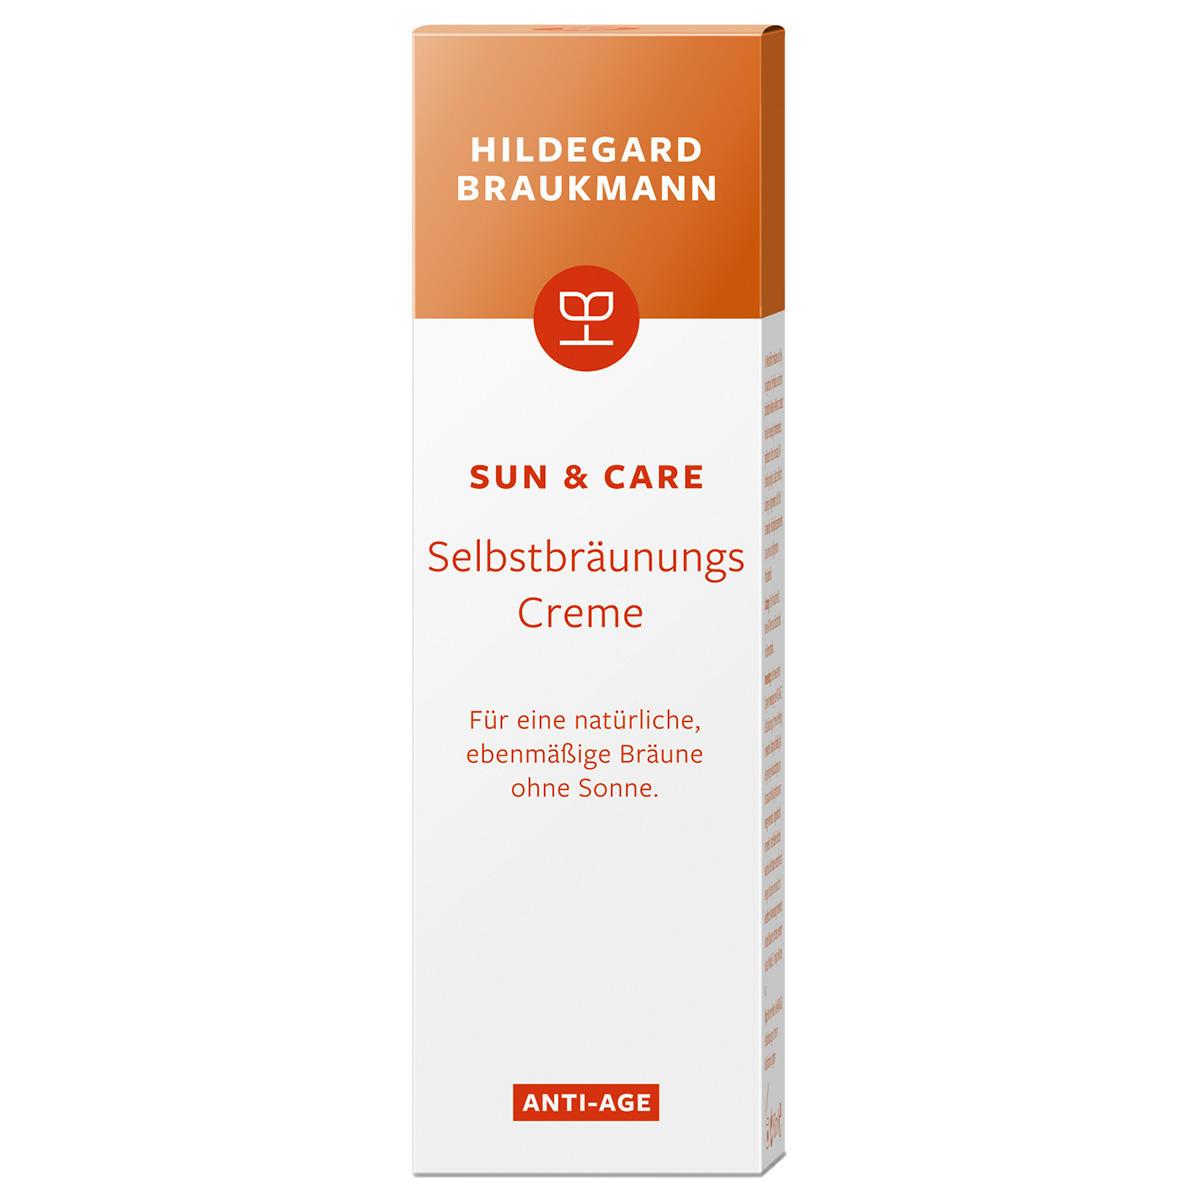 Hildegard Braukmann sun & care Selbstbräunungs Creme 50 ml - 2